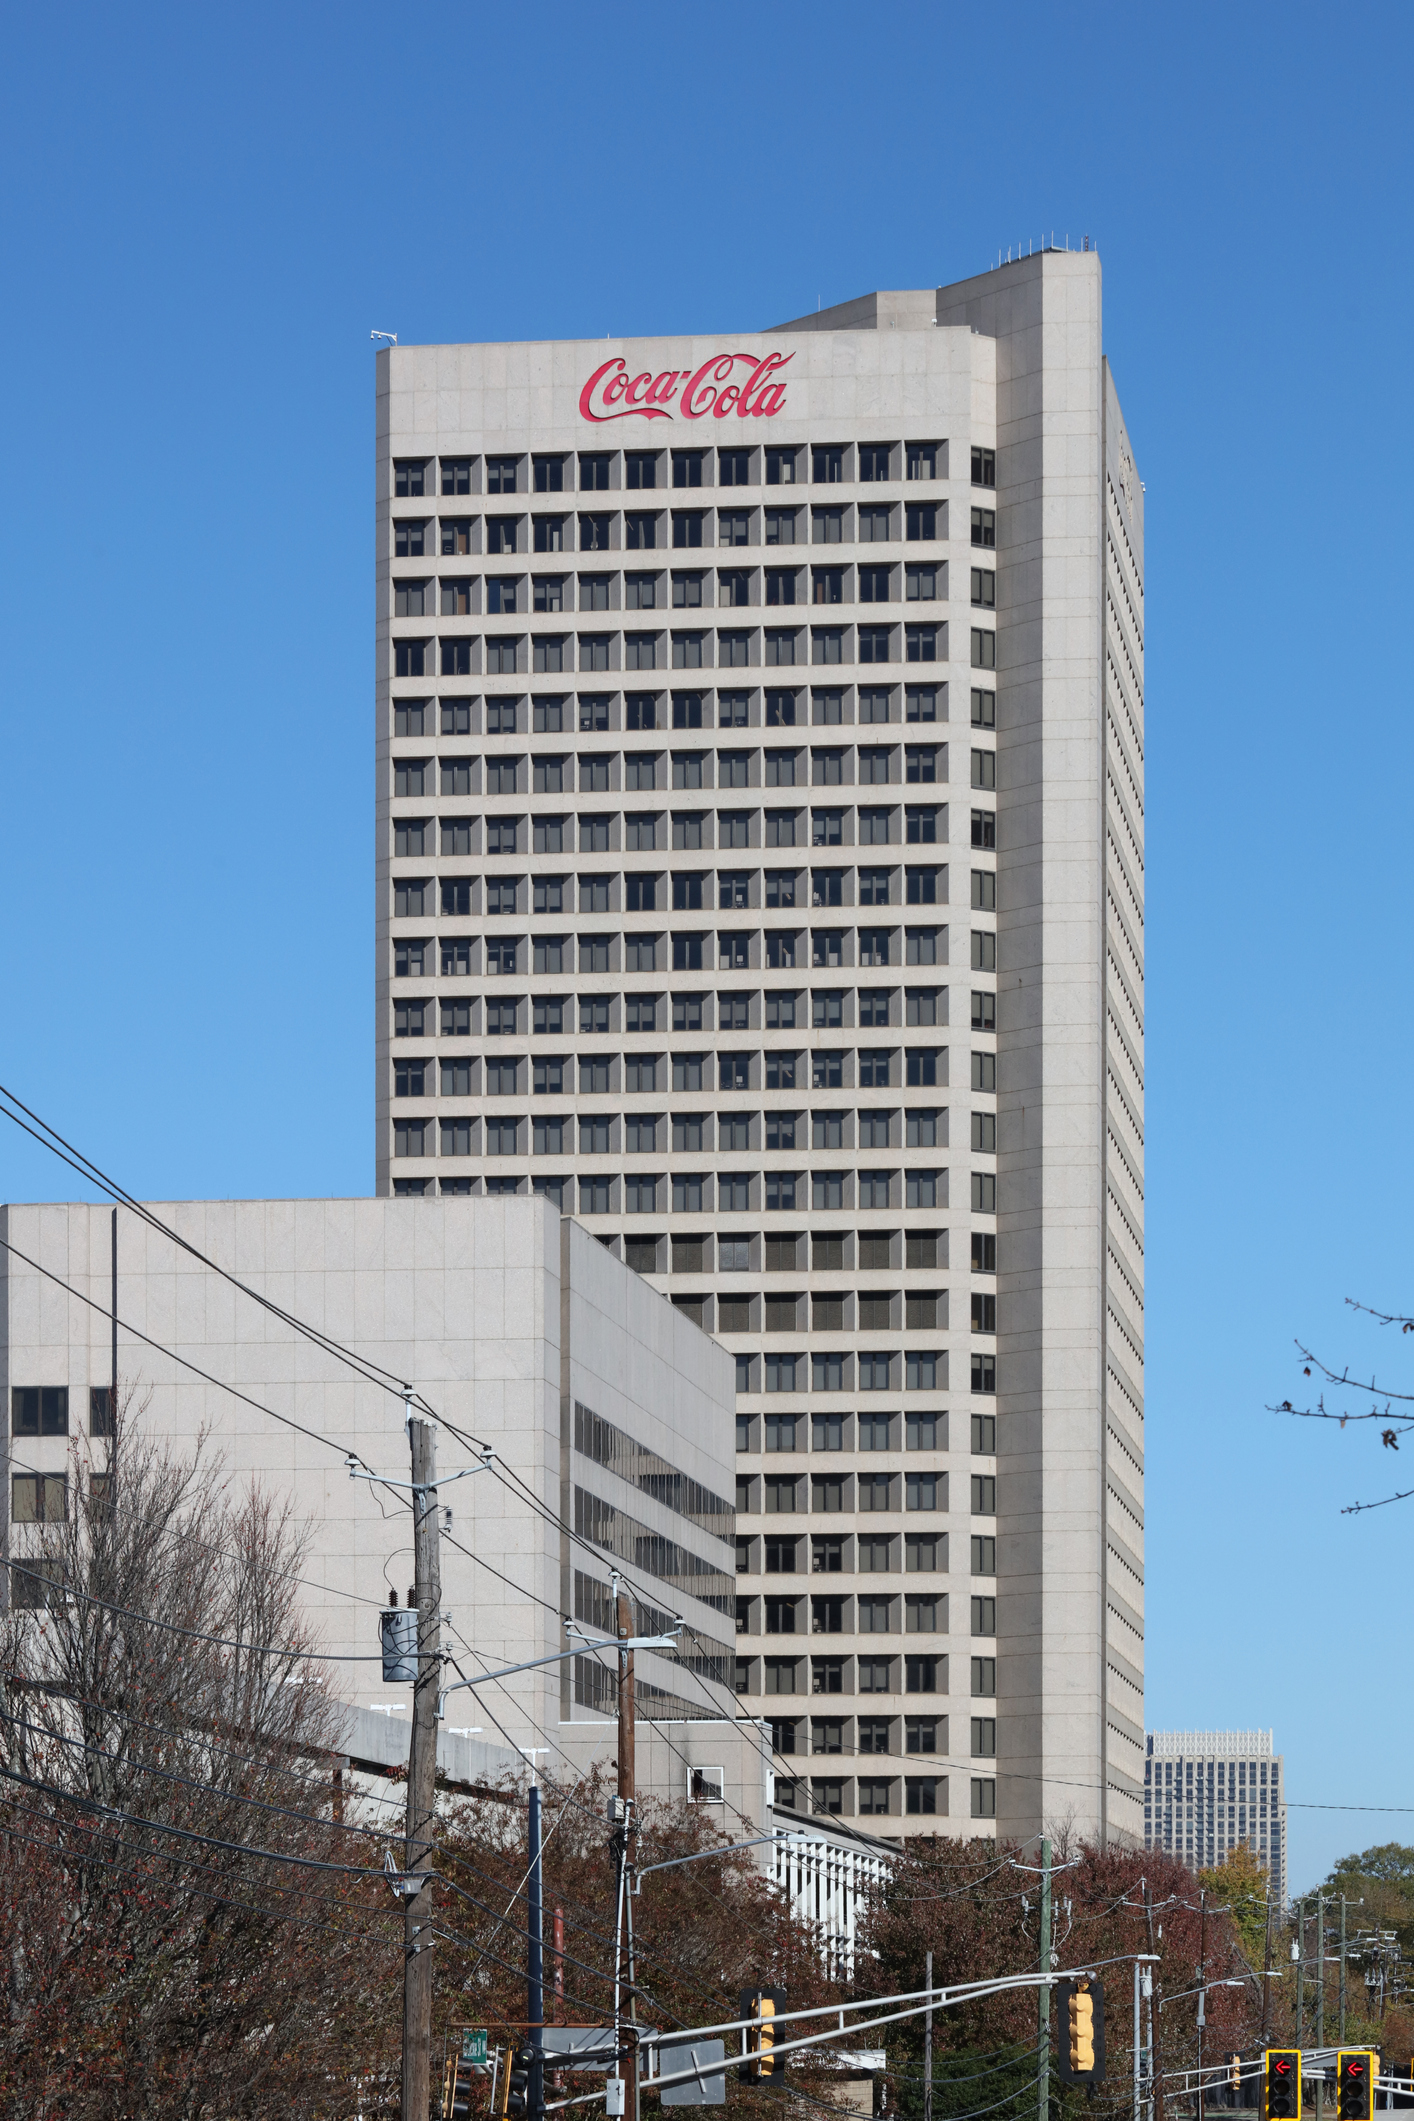 Building toward that reads 'Coca-Cola'